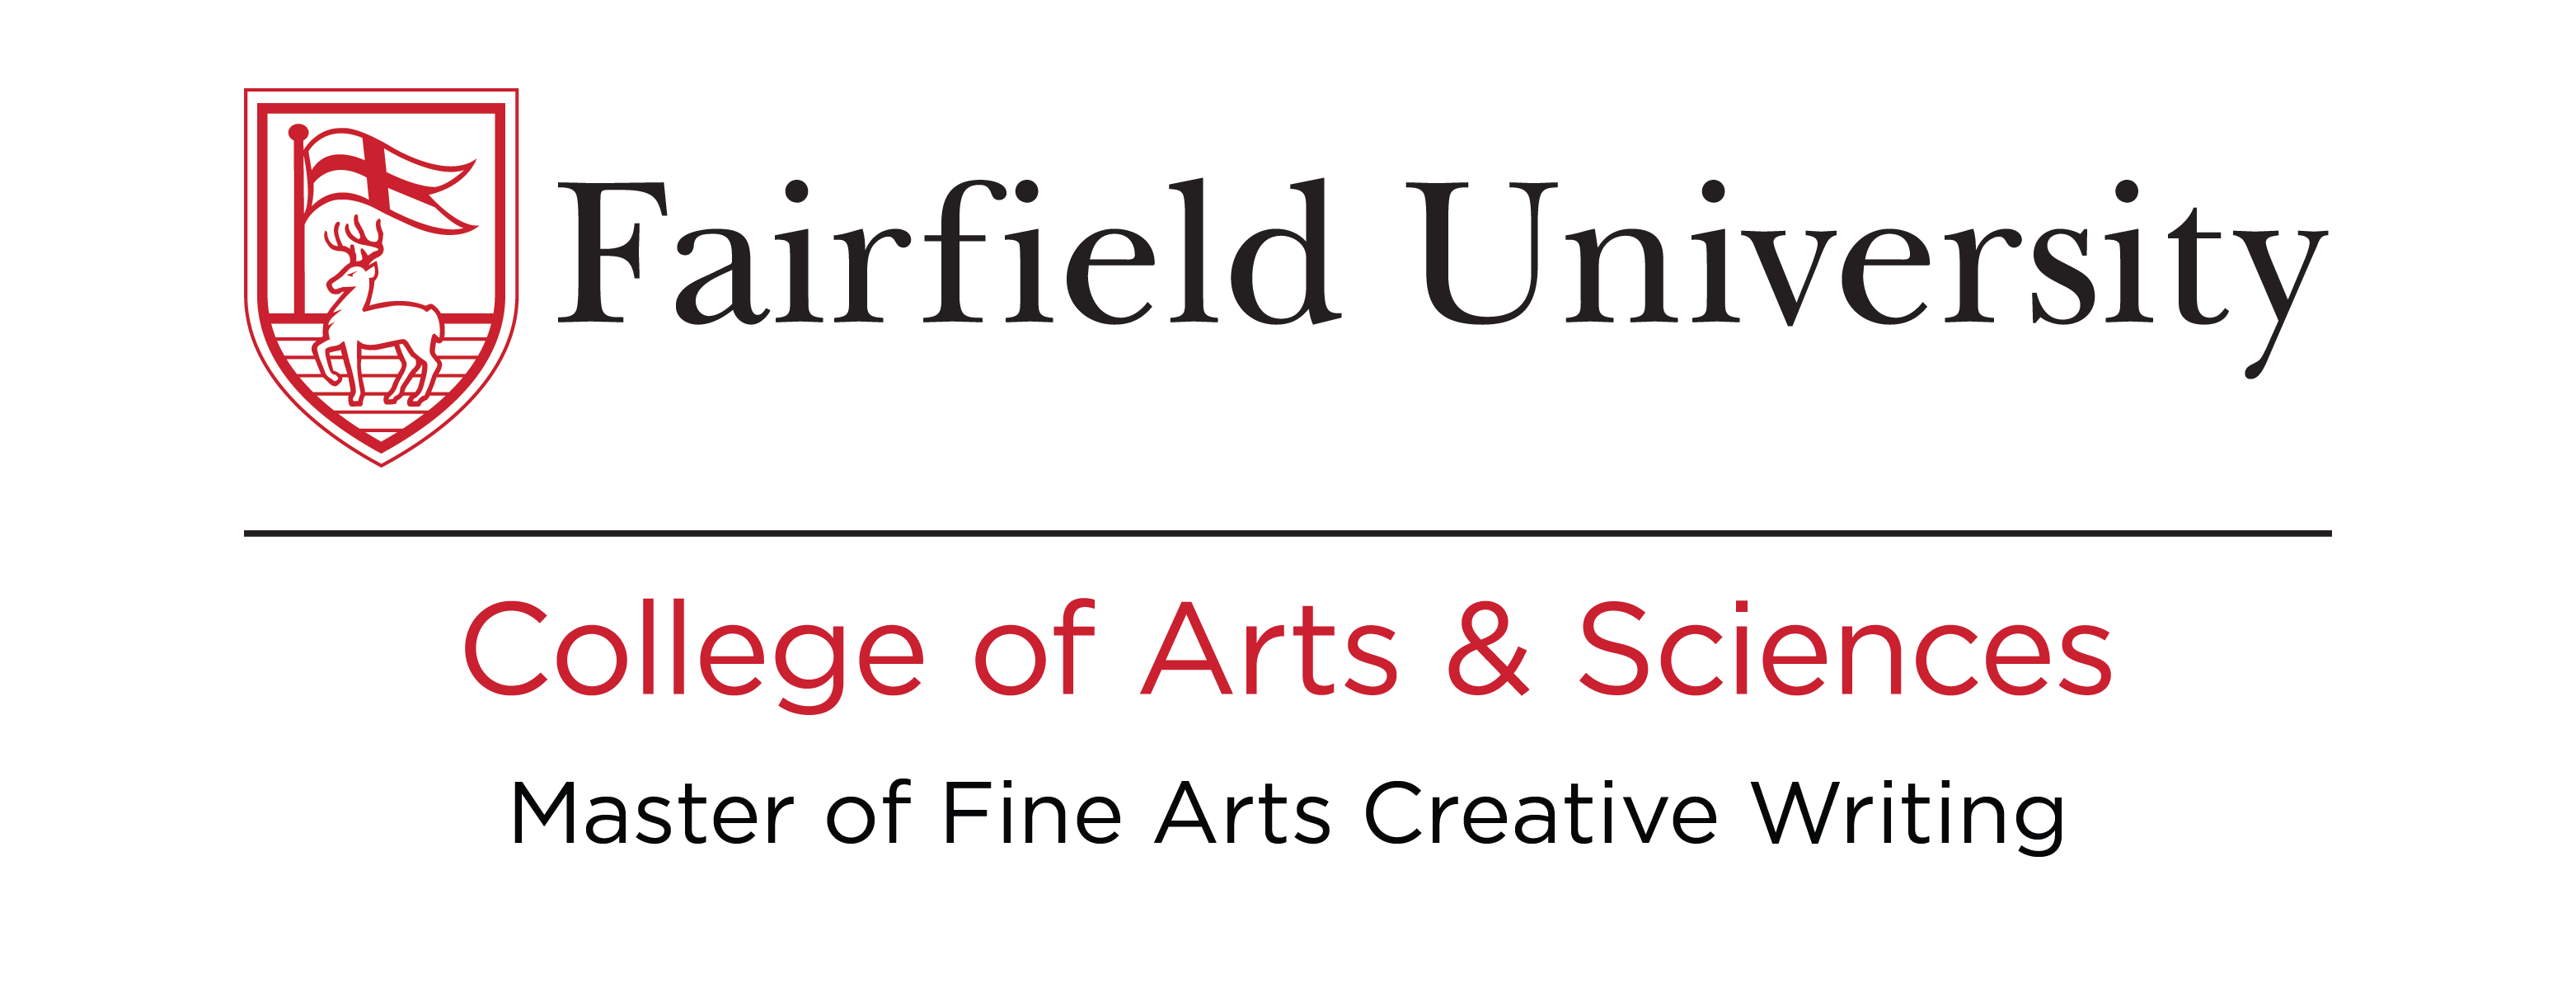 fairfield-university-america-magazine-classifieds-marketplace